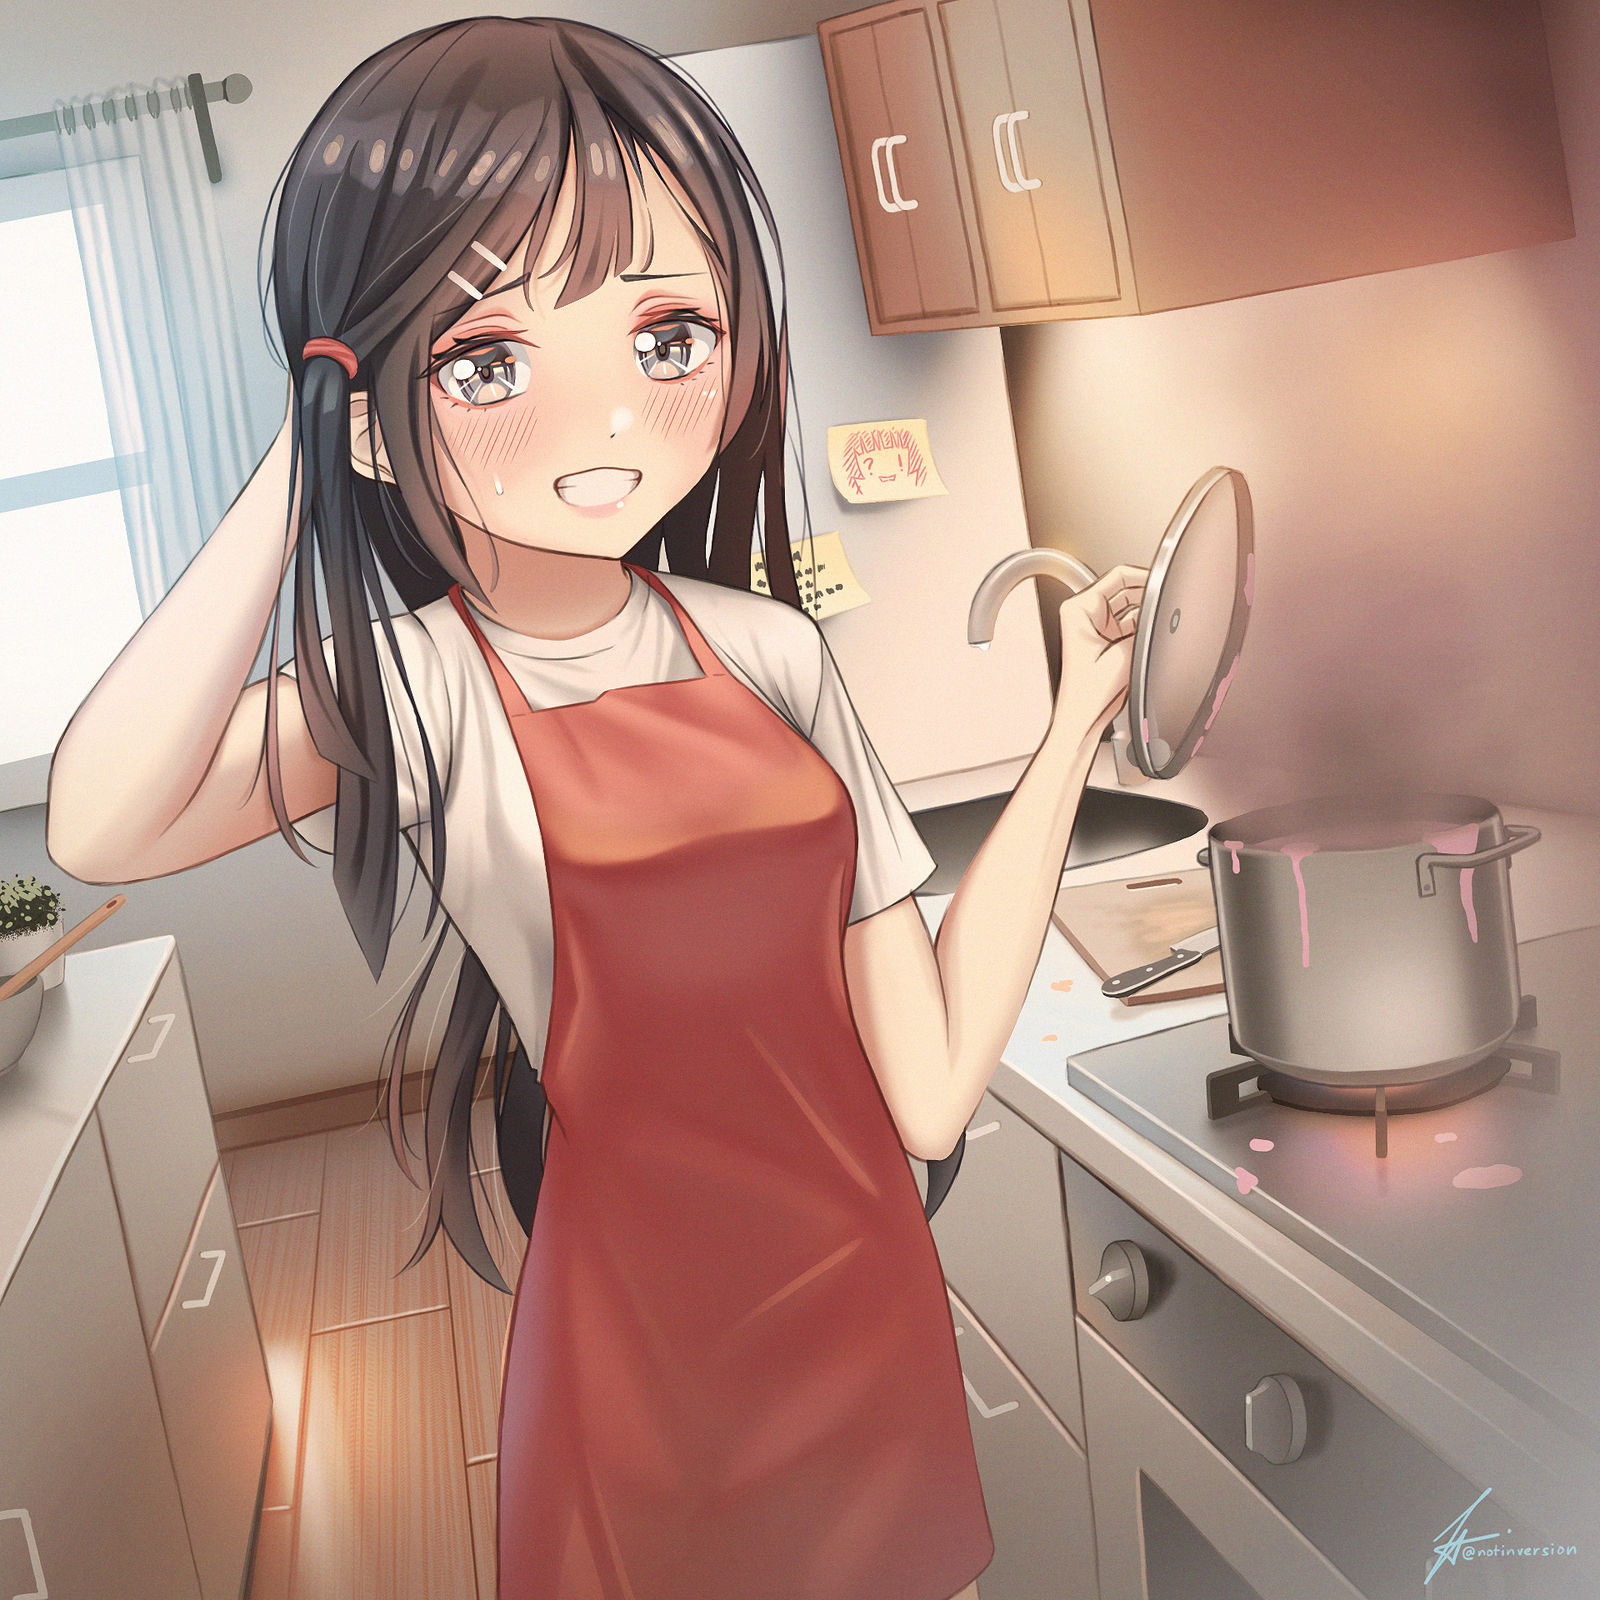 Setsuna cooking插画图片壁纸